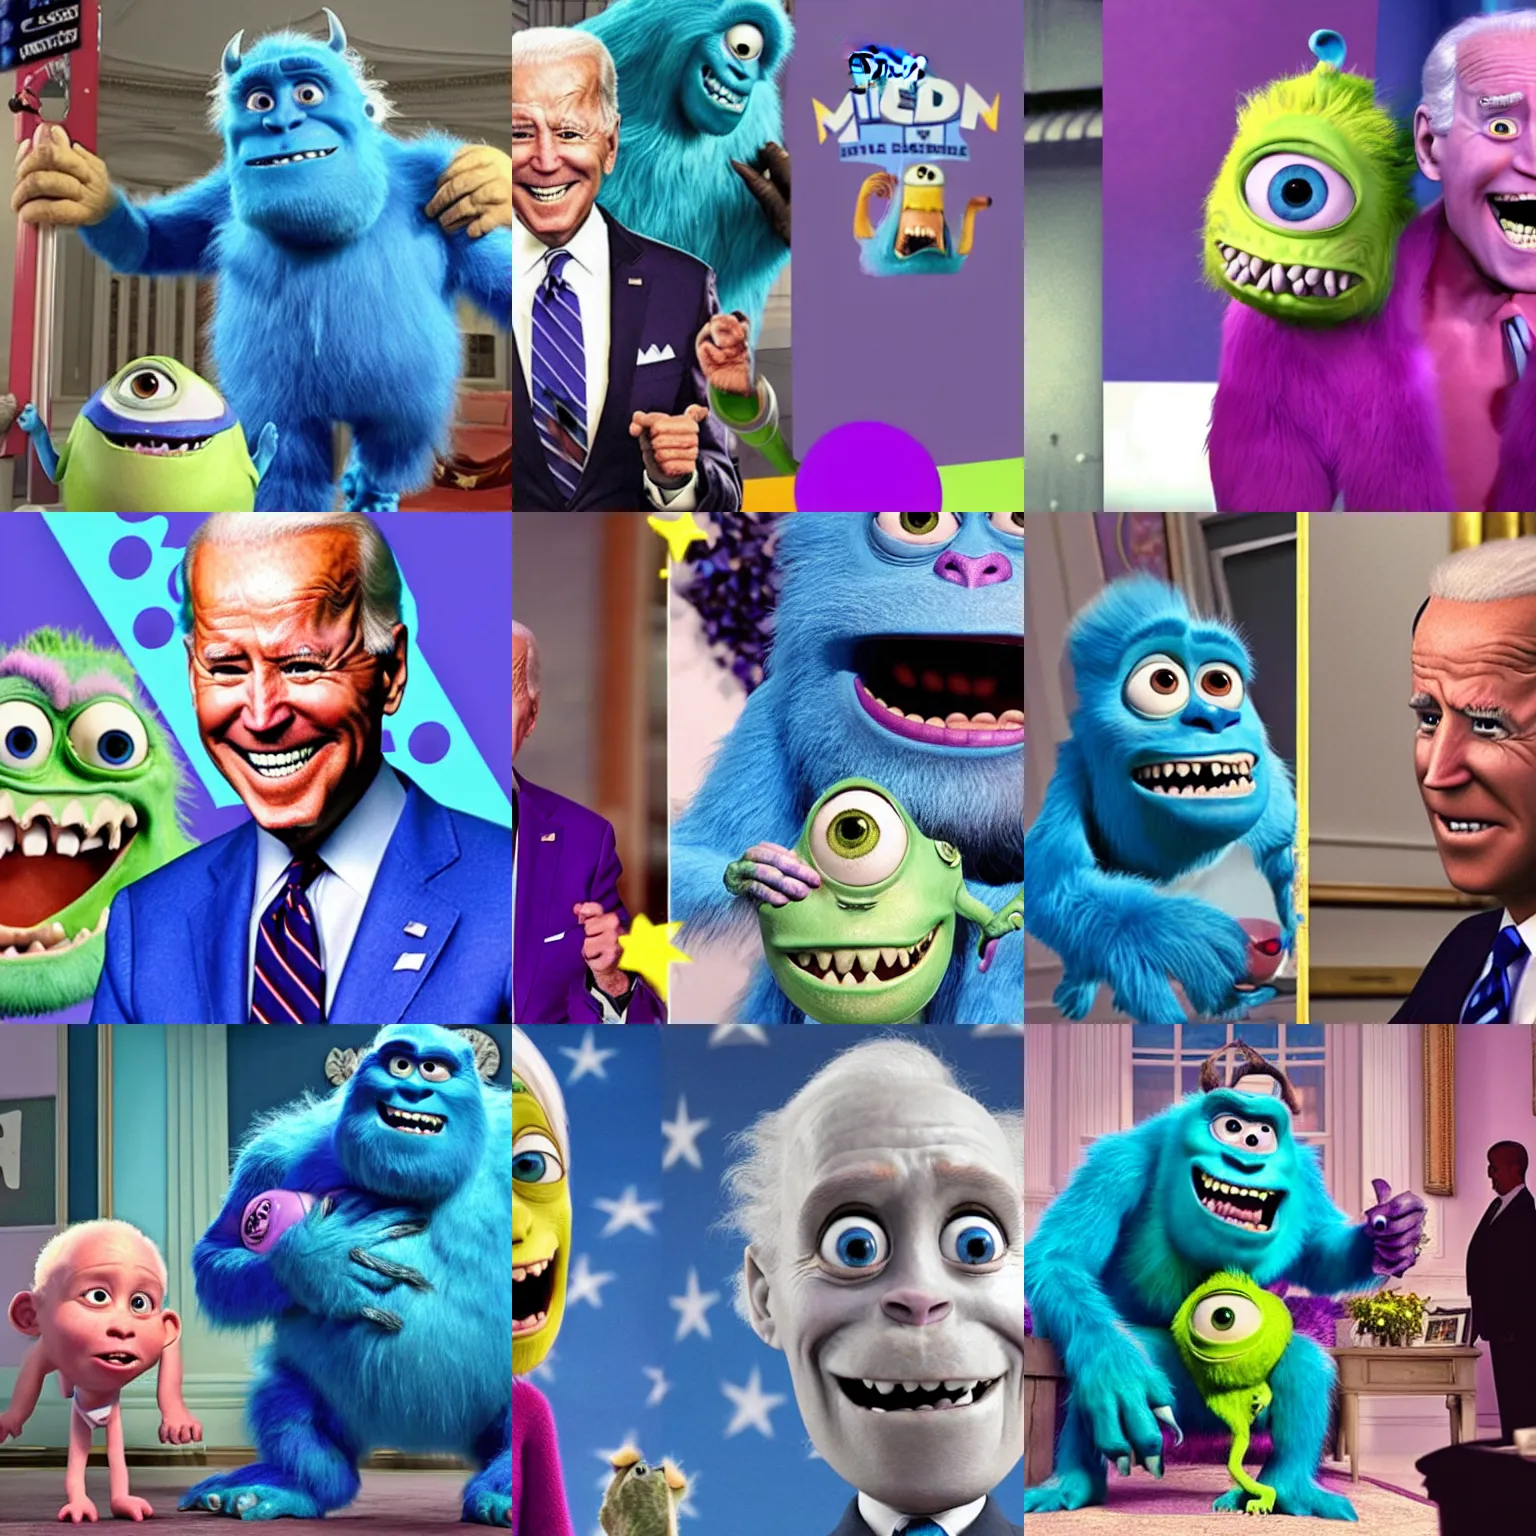 Prompt: Joe Biden as a monster in Monsters Inc.